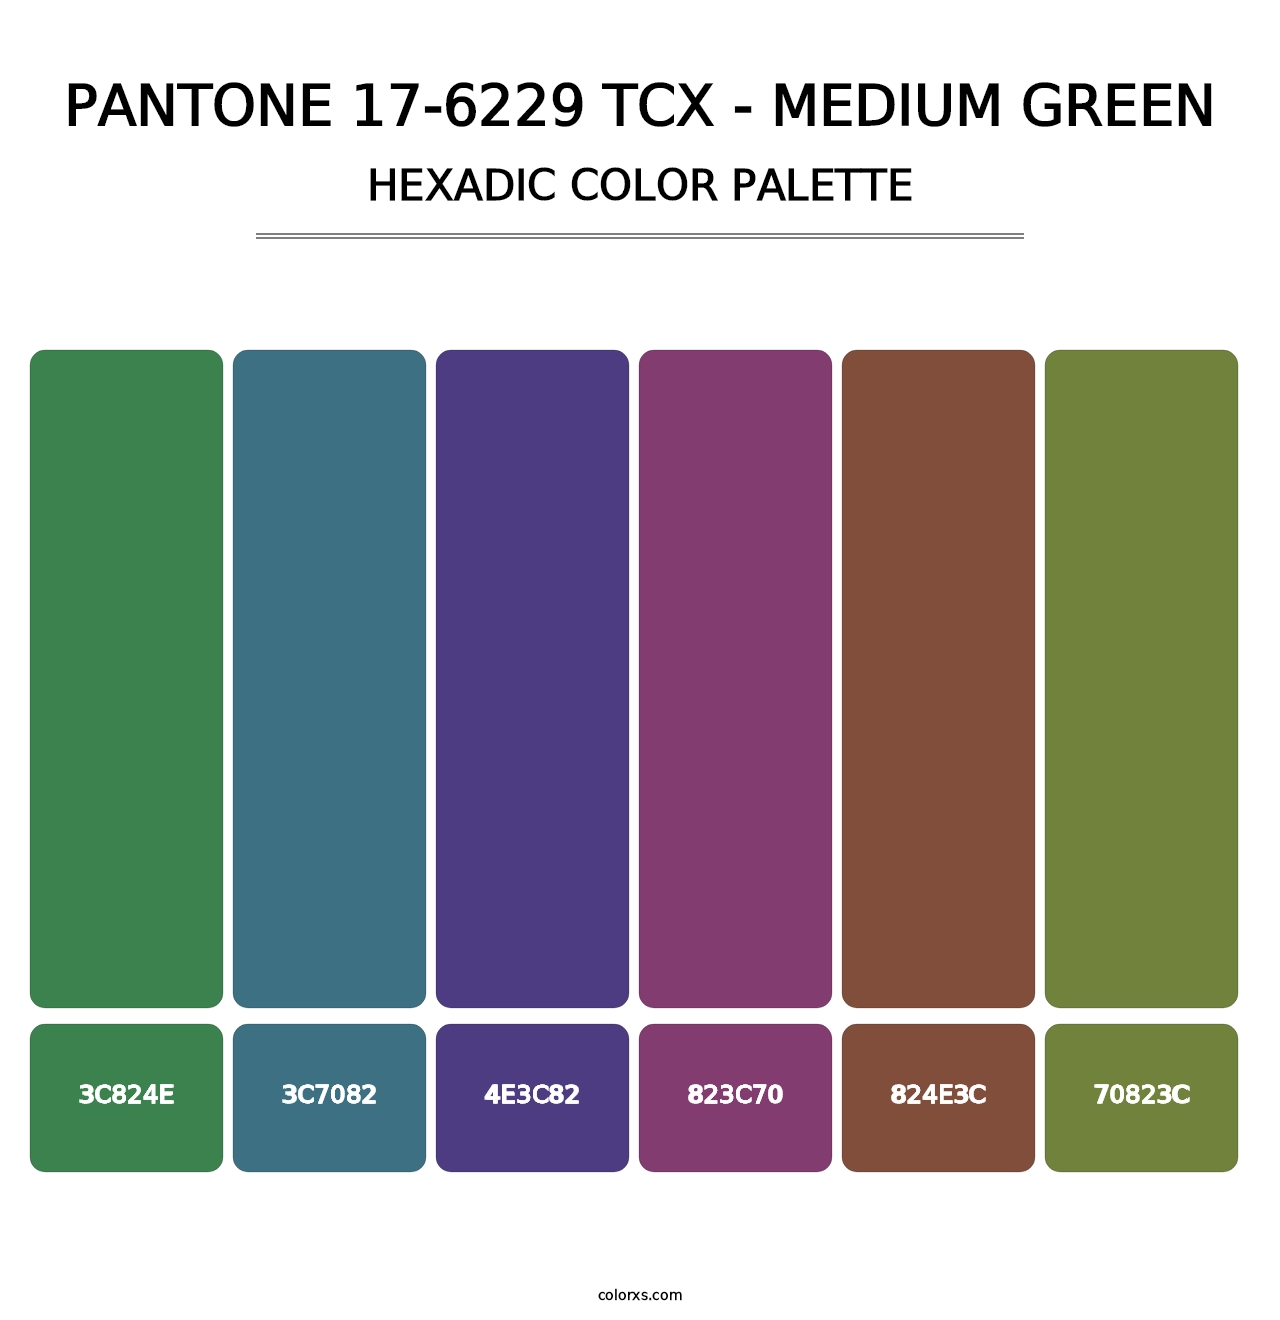 PANTONE 17-6229 TCX - Medium Green - Hexadic Color Palette